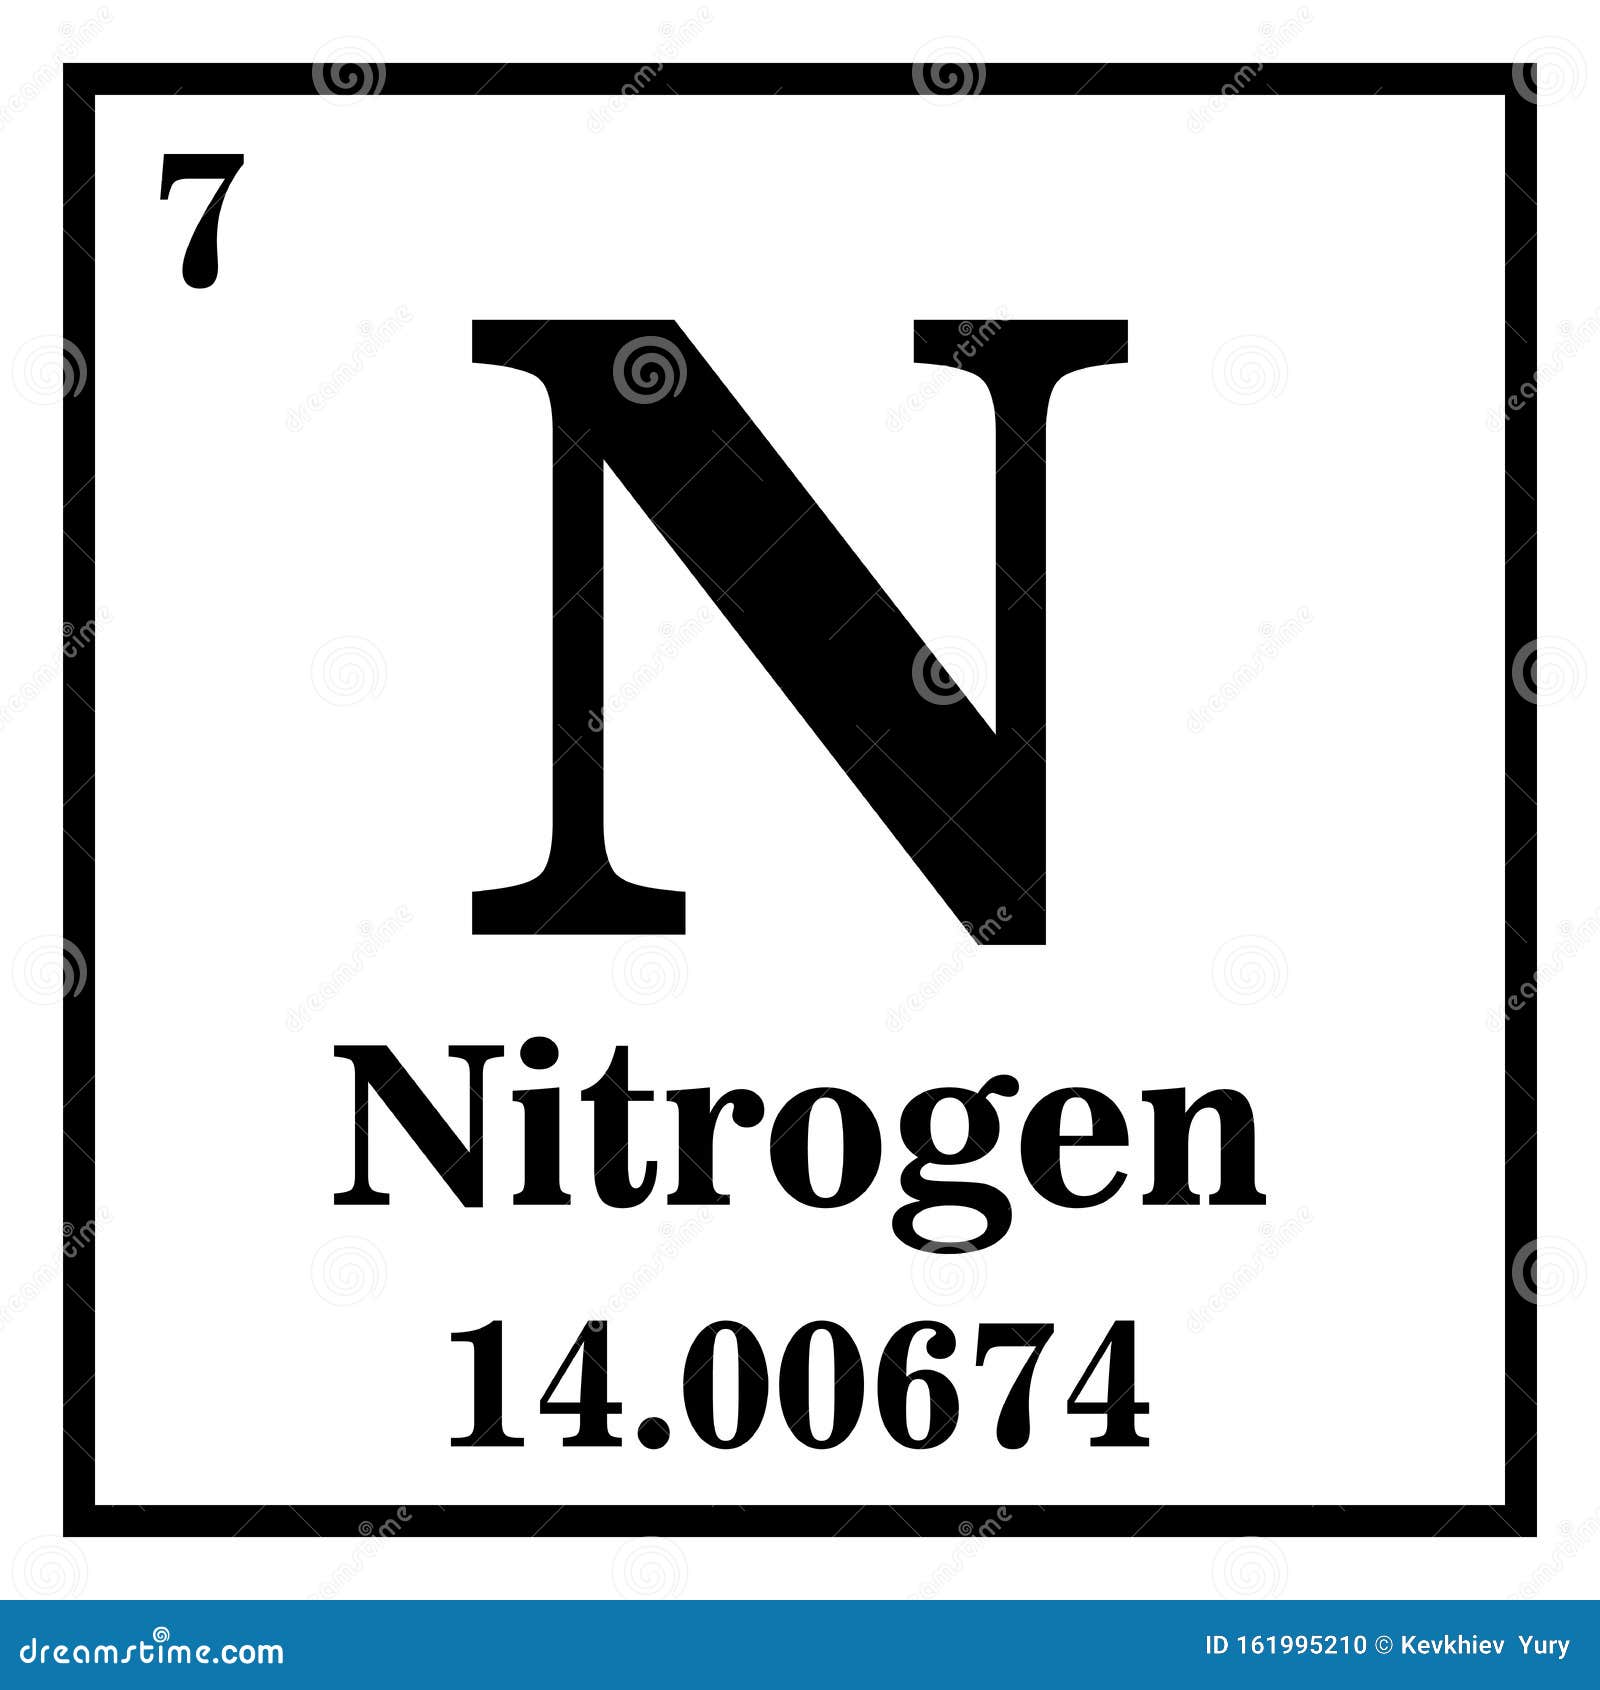 Nitrogen Periodic Table Elements Stock Illustrations – 20 ...